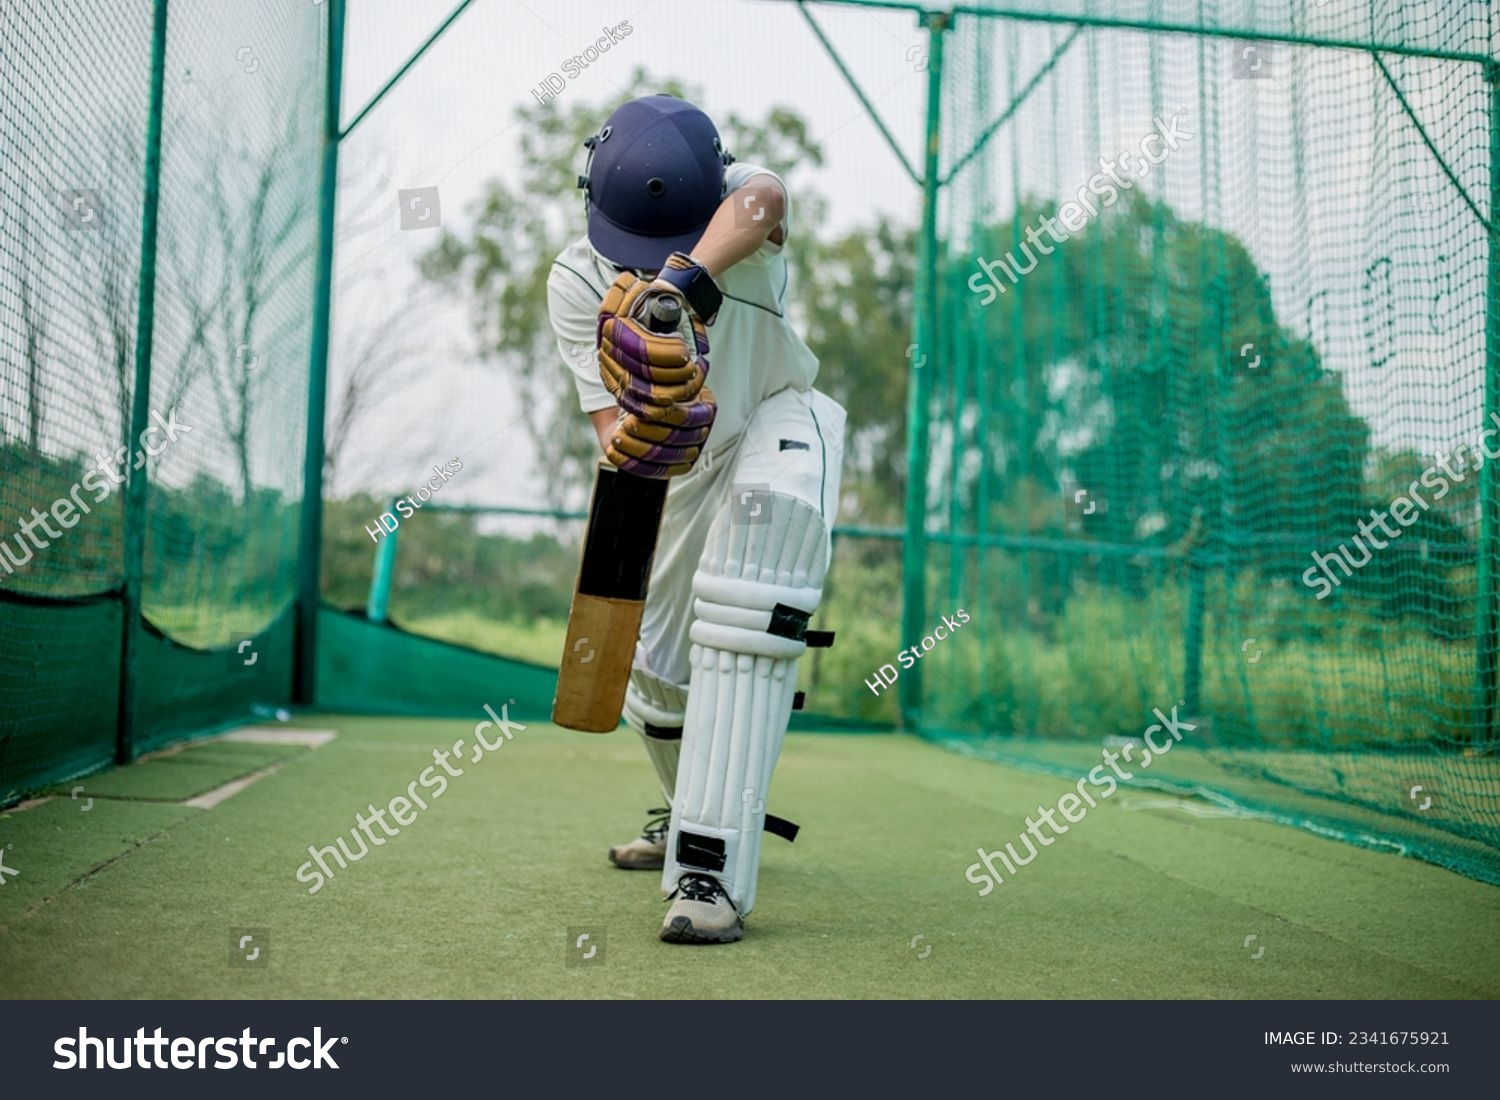 Front view of Cricket Batsman Action, Cricket game closeup player batting ball  #2341675921